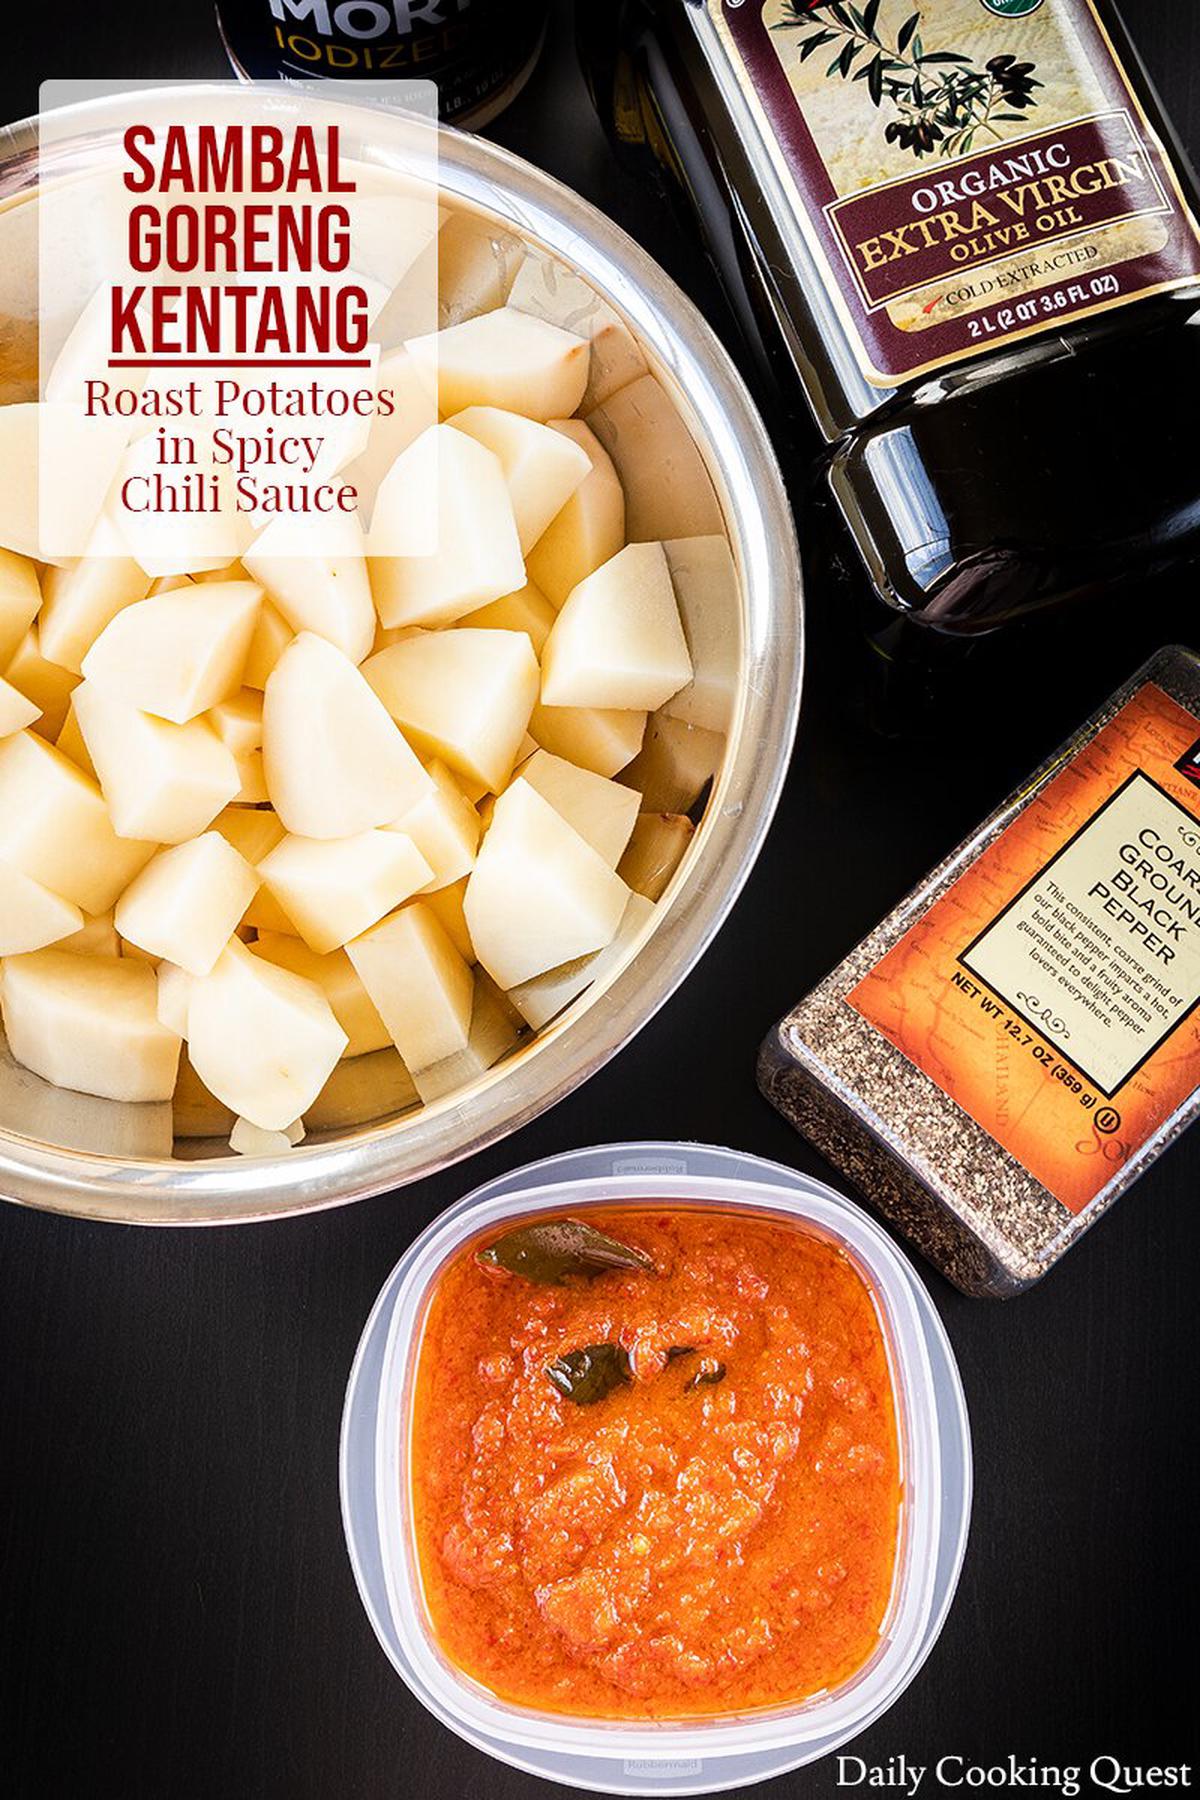 Ingredients to prepare sambal goreng kentang (roast potatoes in spicy chili sauce): homemade sambal goreng (fried chili paste), potatoes, olive oil, salt, and pepper.